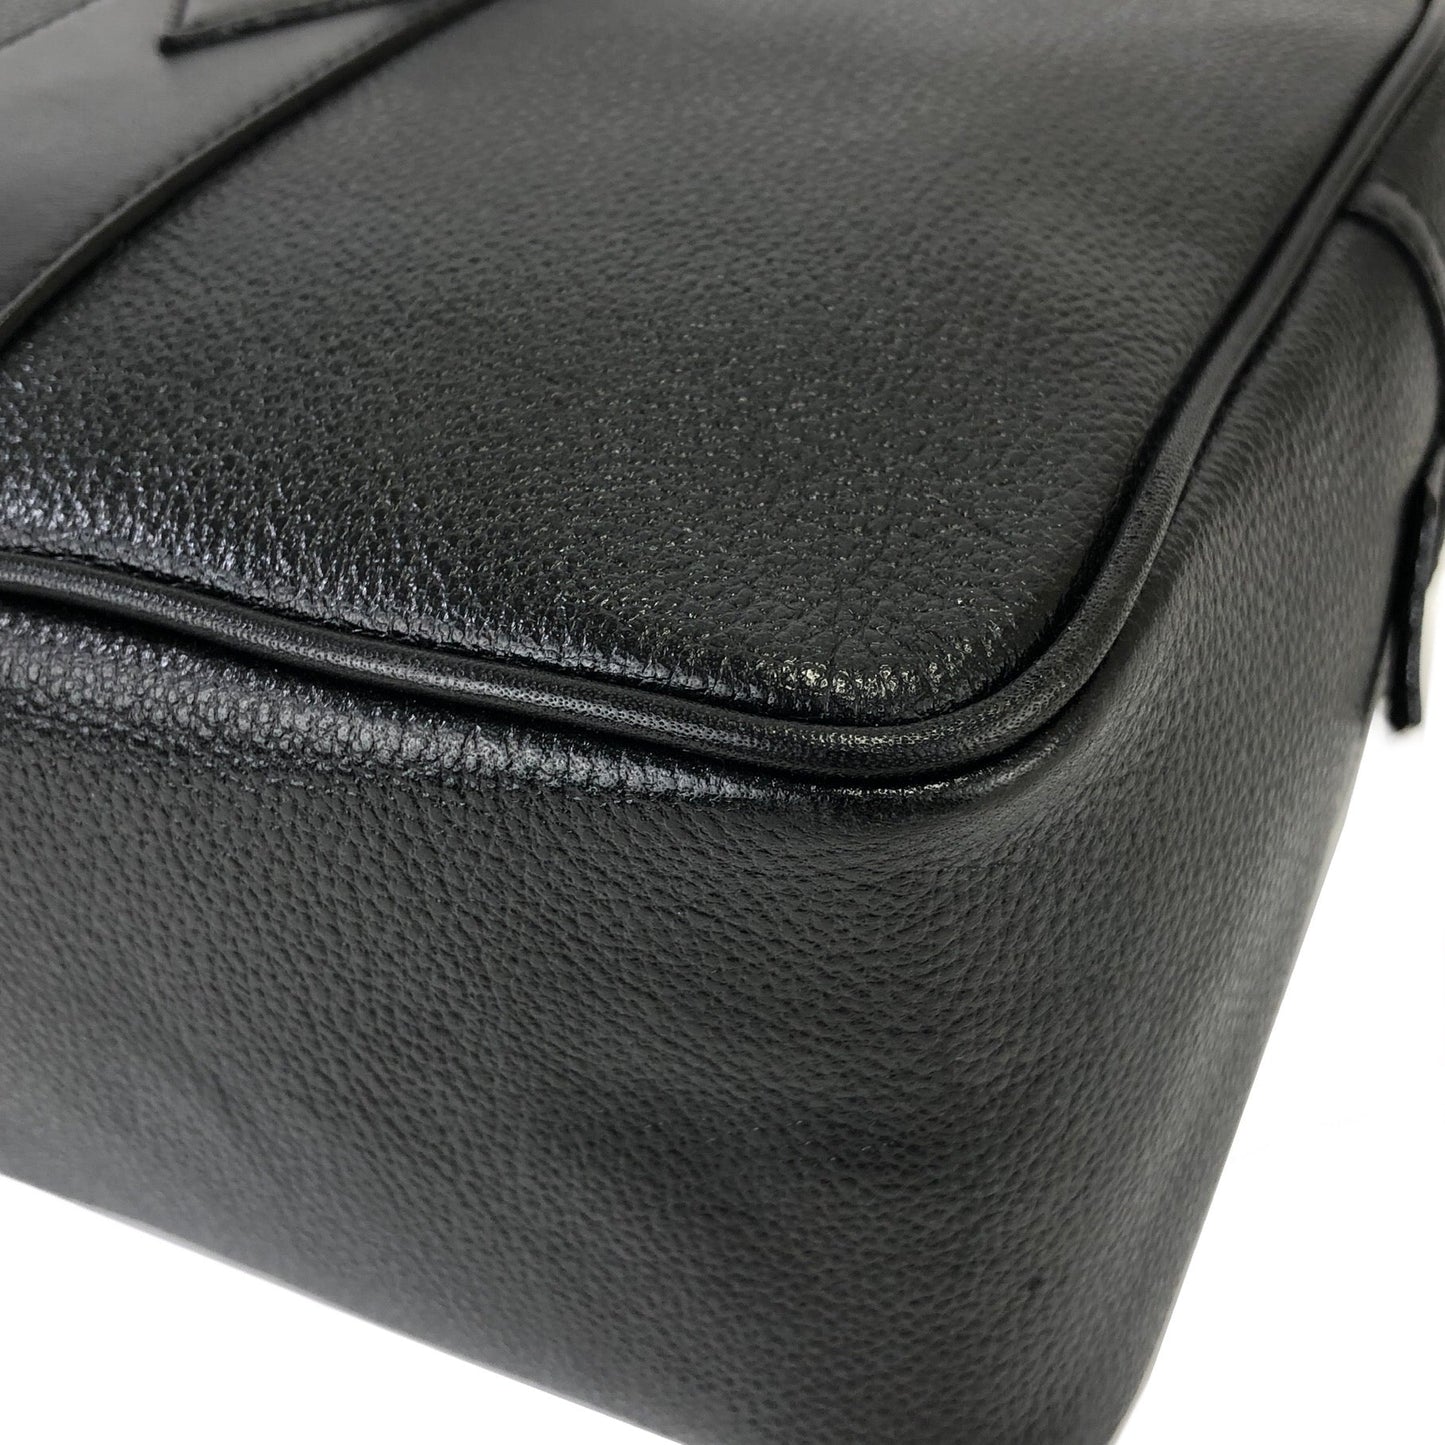 Yves Saint Laurent YSL logo Handbag Boston bag Black Vintage Old ruwjug